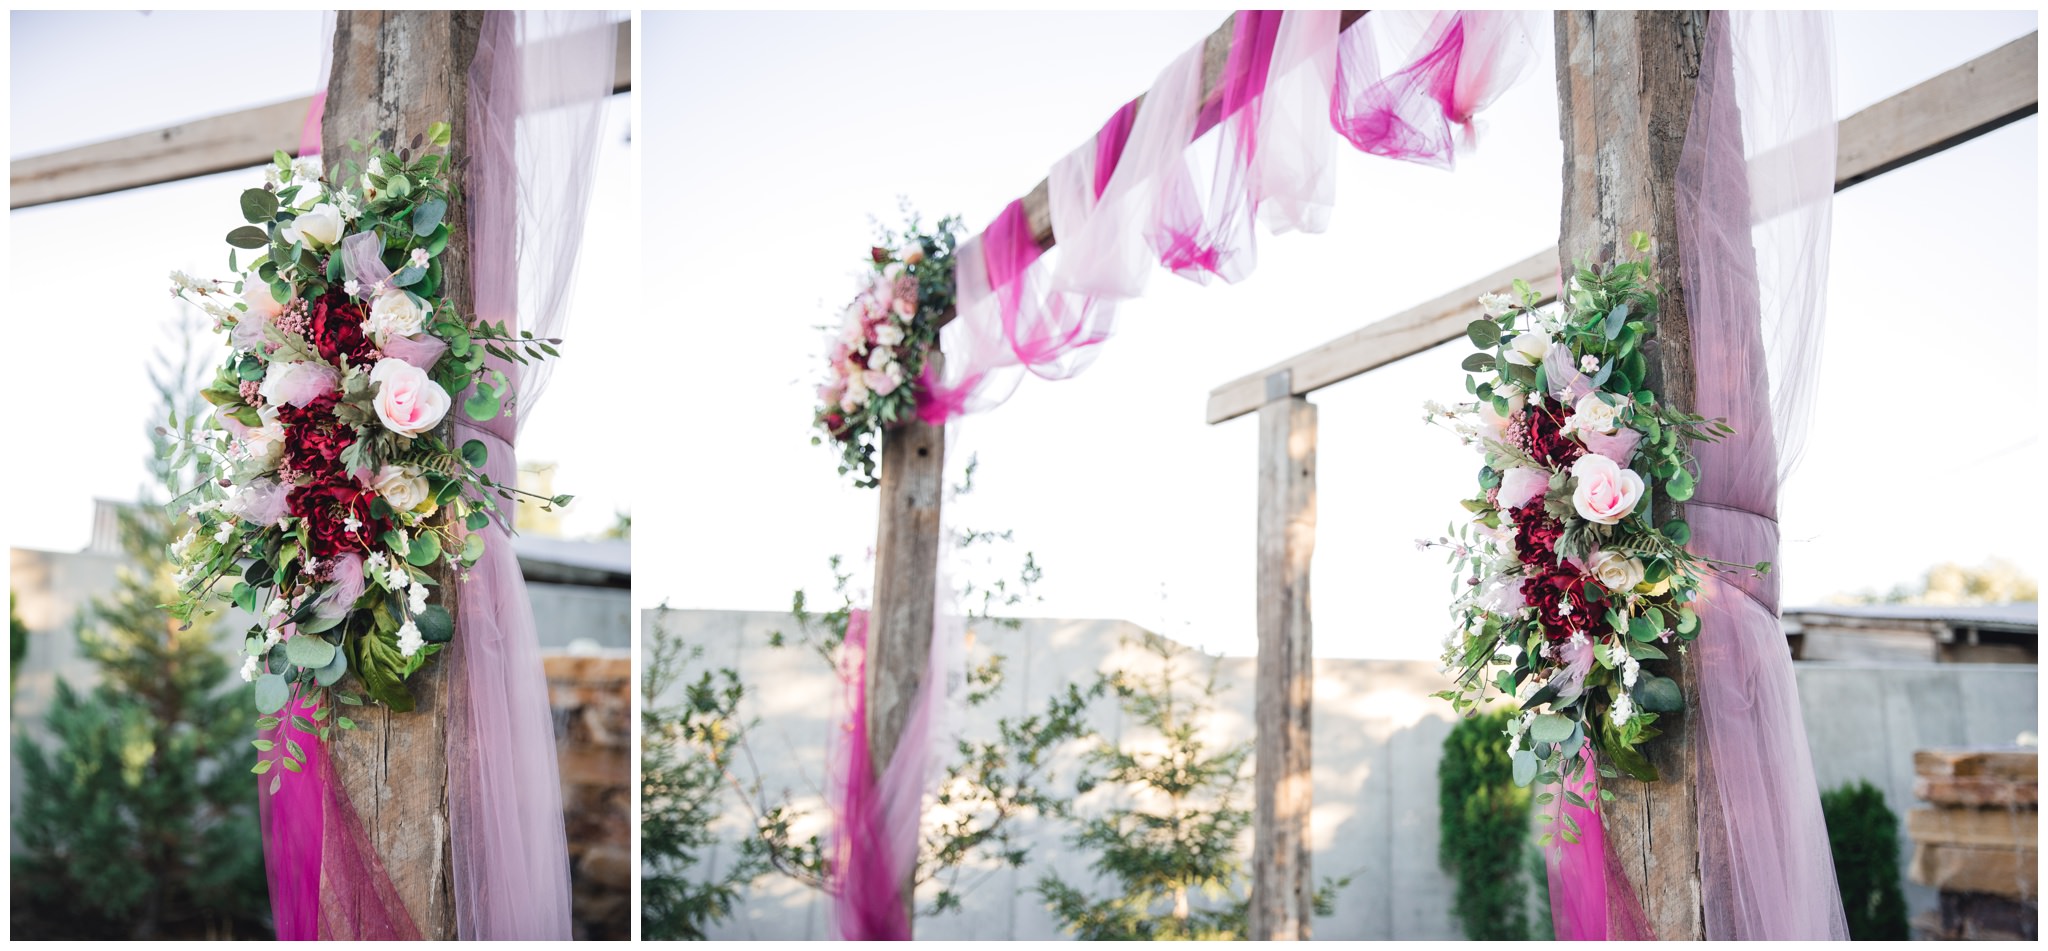 detail pictures of burgundy floral arrangements at wedding in Lindon, Utah.